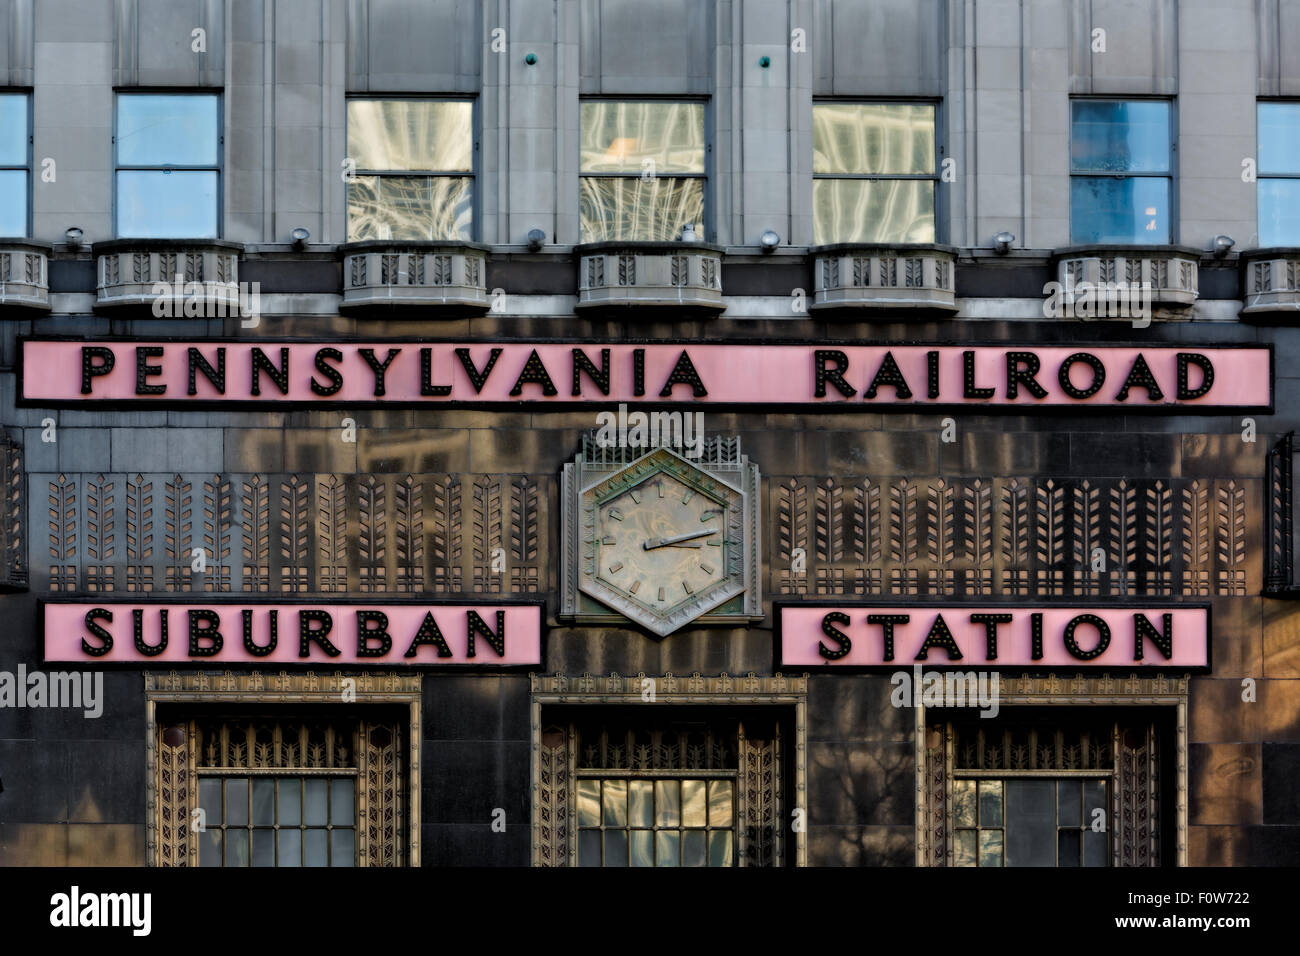 Pennsylvania S-Bahnhof - Ansicht schließen im Art-deco-Architektur Stil der Pennsylvania Railroad Suburban Station in Philadelphia, Pennsylvania. Stockfoto